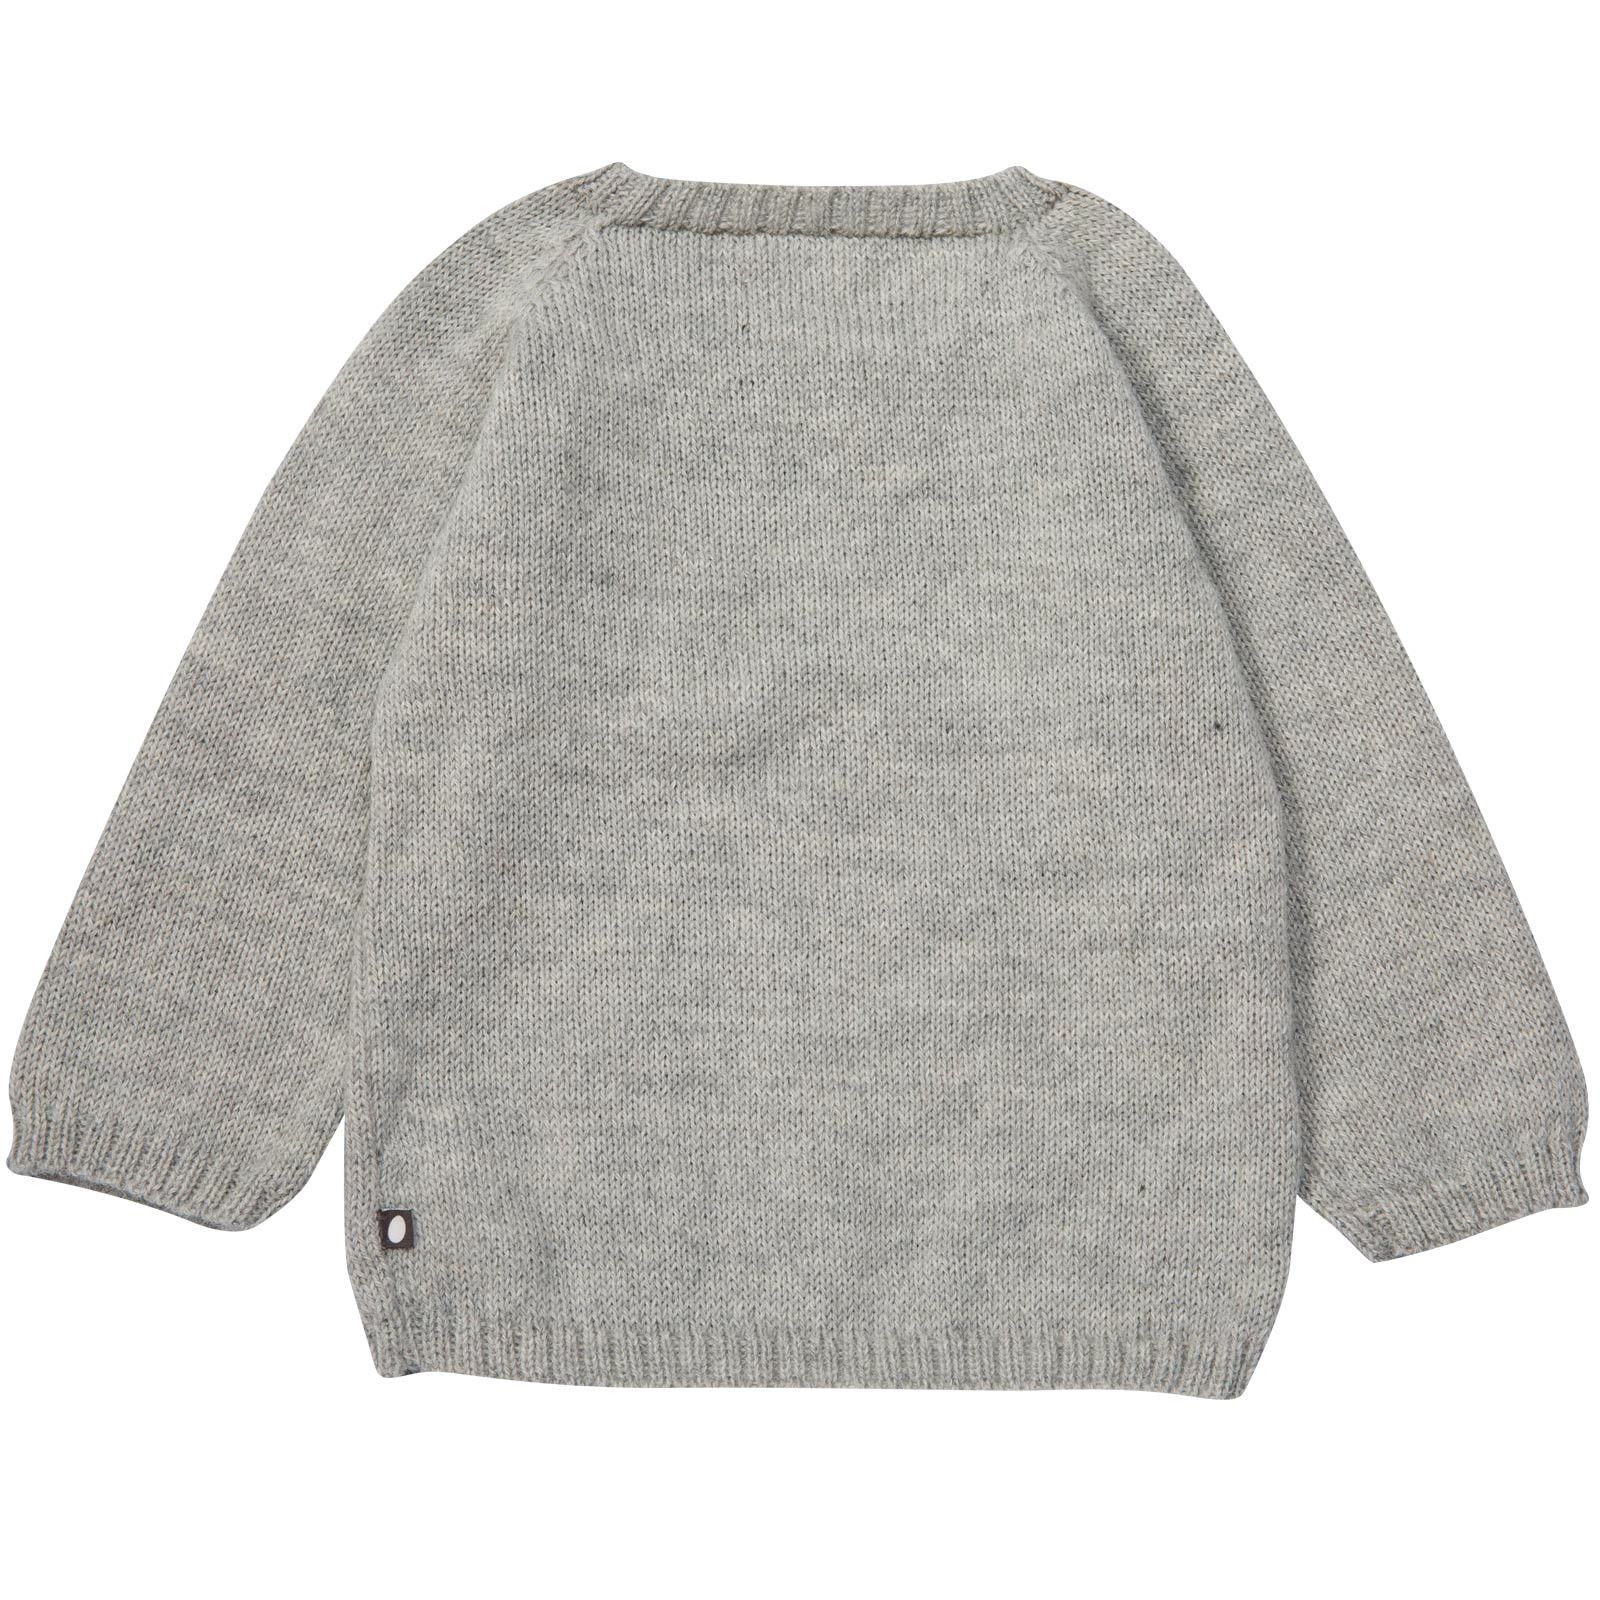 Girls Light Grey Sweater With Red Radish Trims - CÉMAROSE | Children's Fashion Store - 2